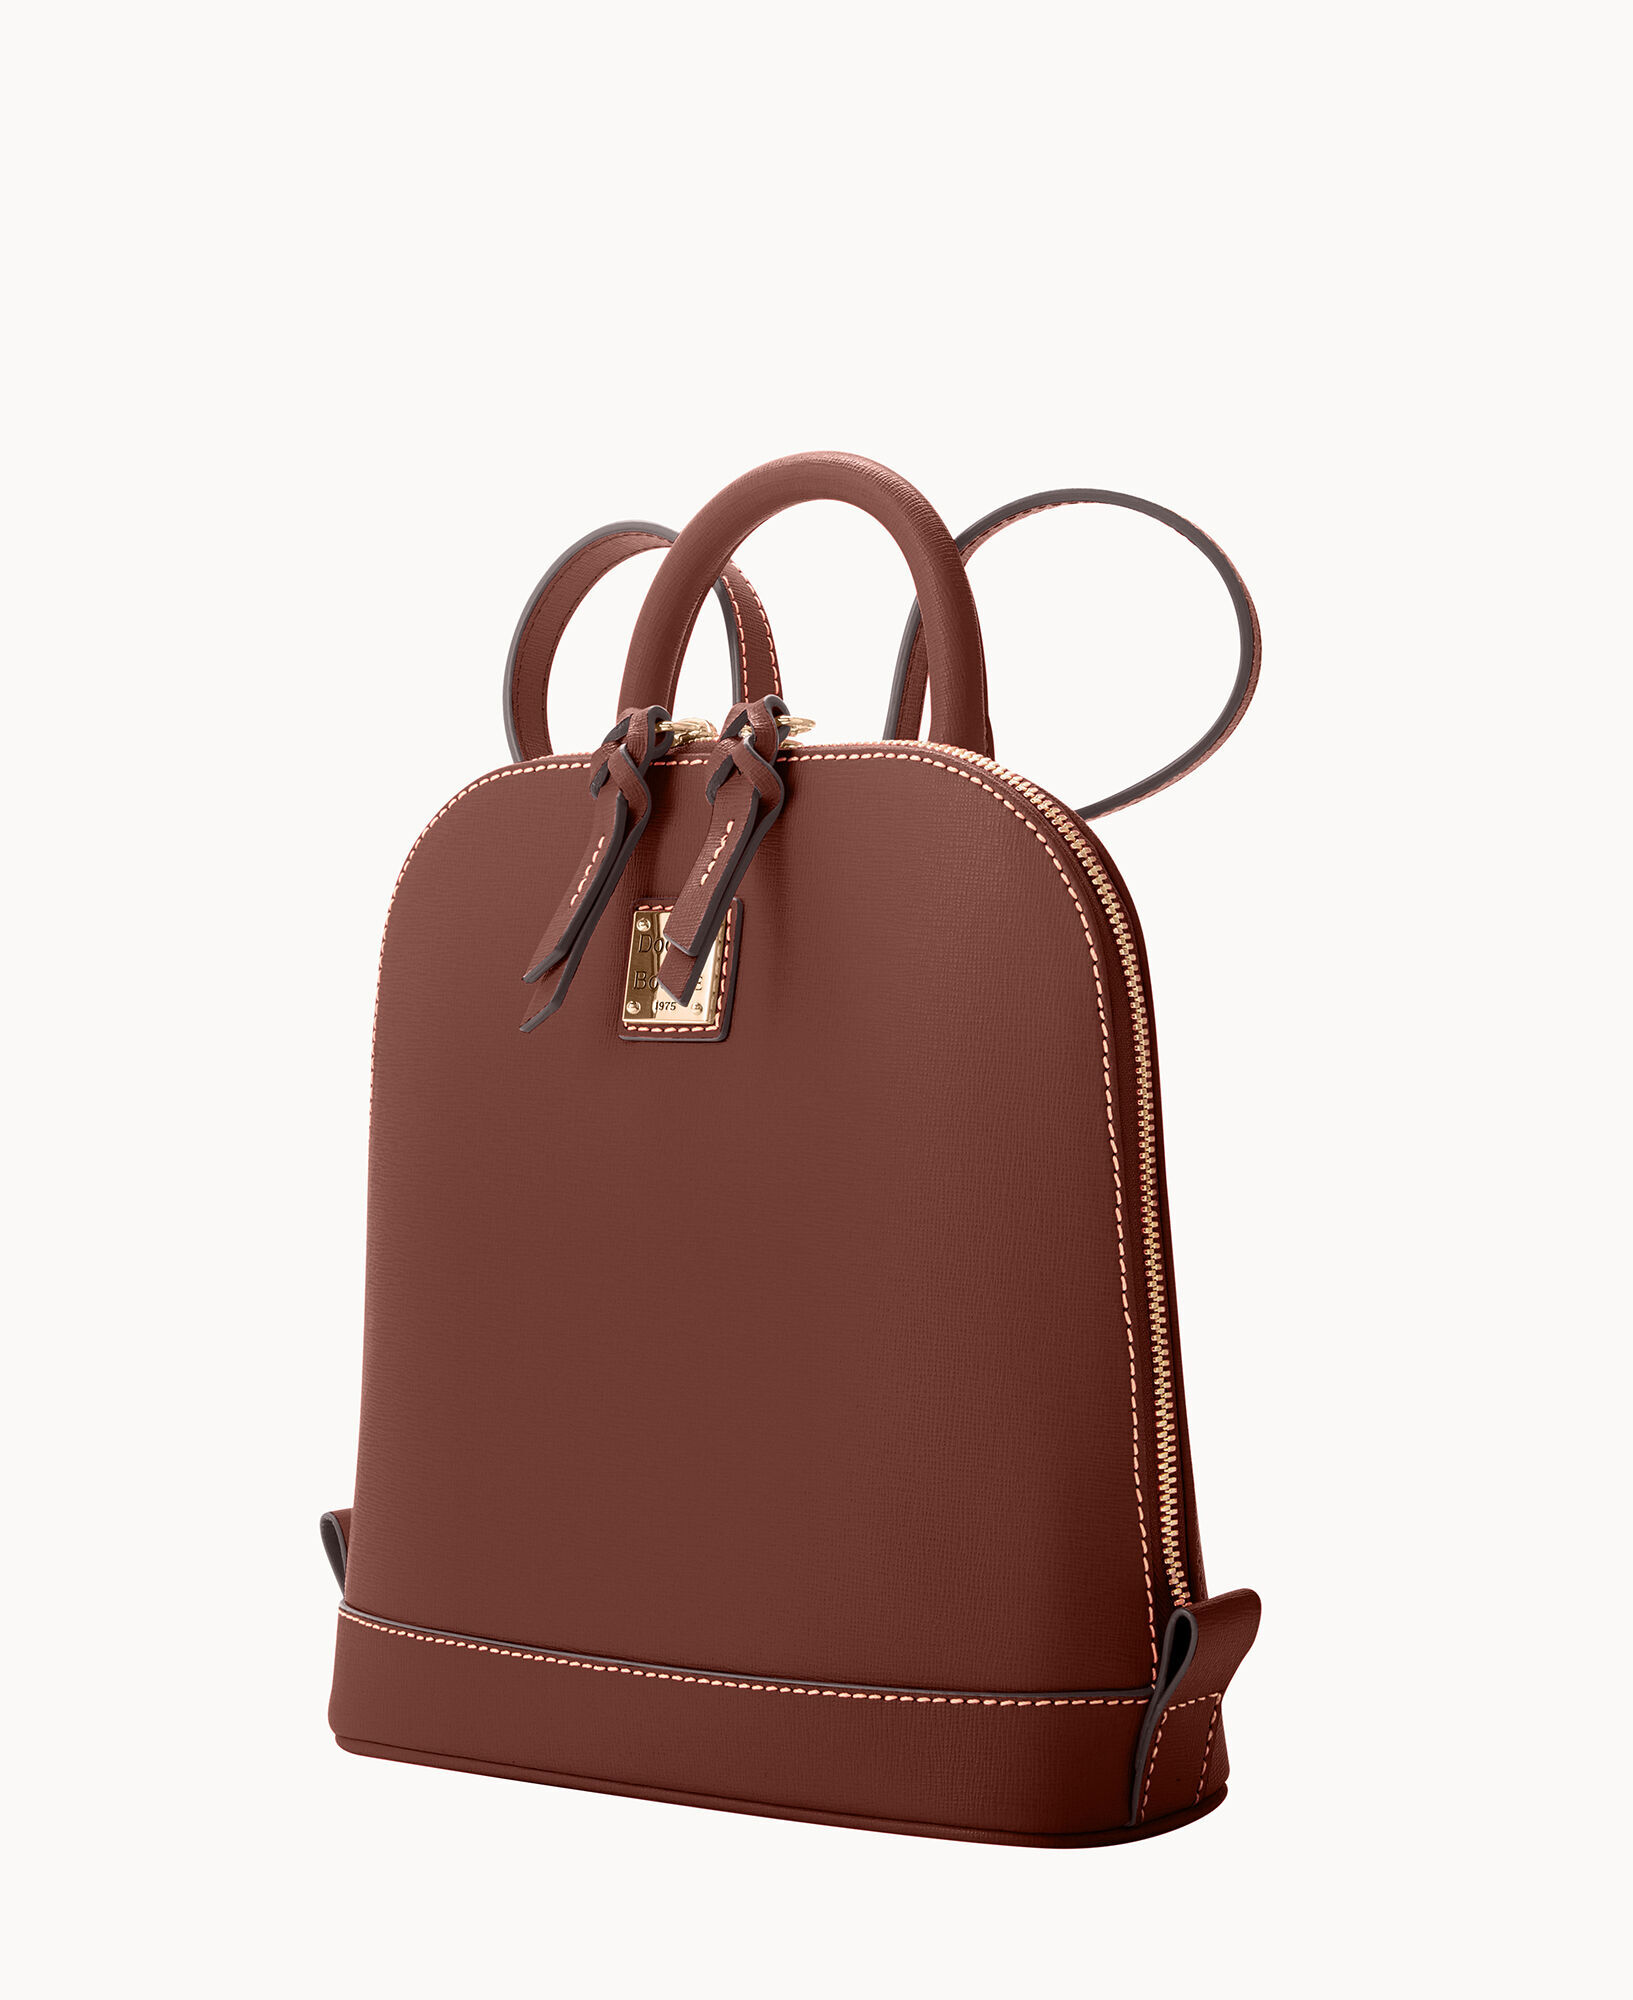 Dooney & Bourke Saffiano Small Leather Crossbody Bag